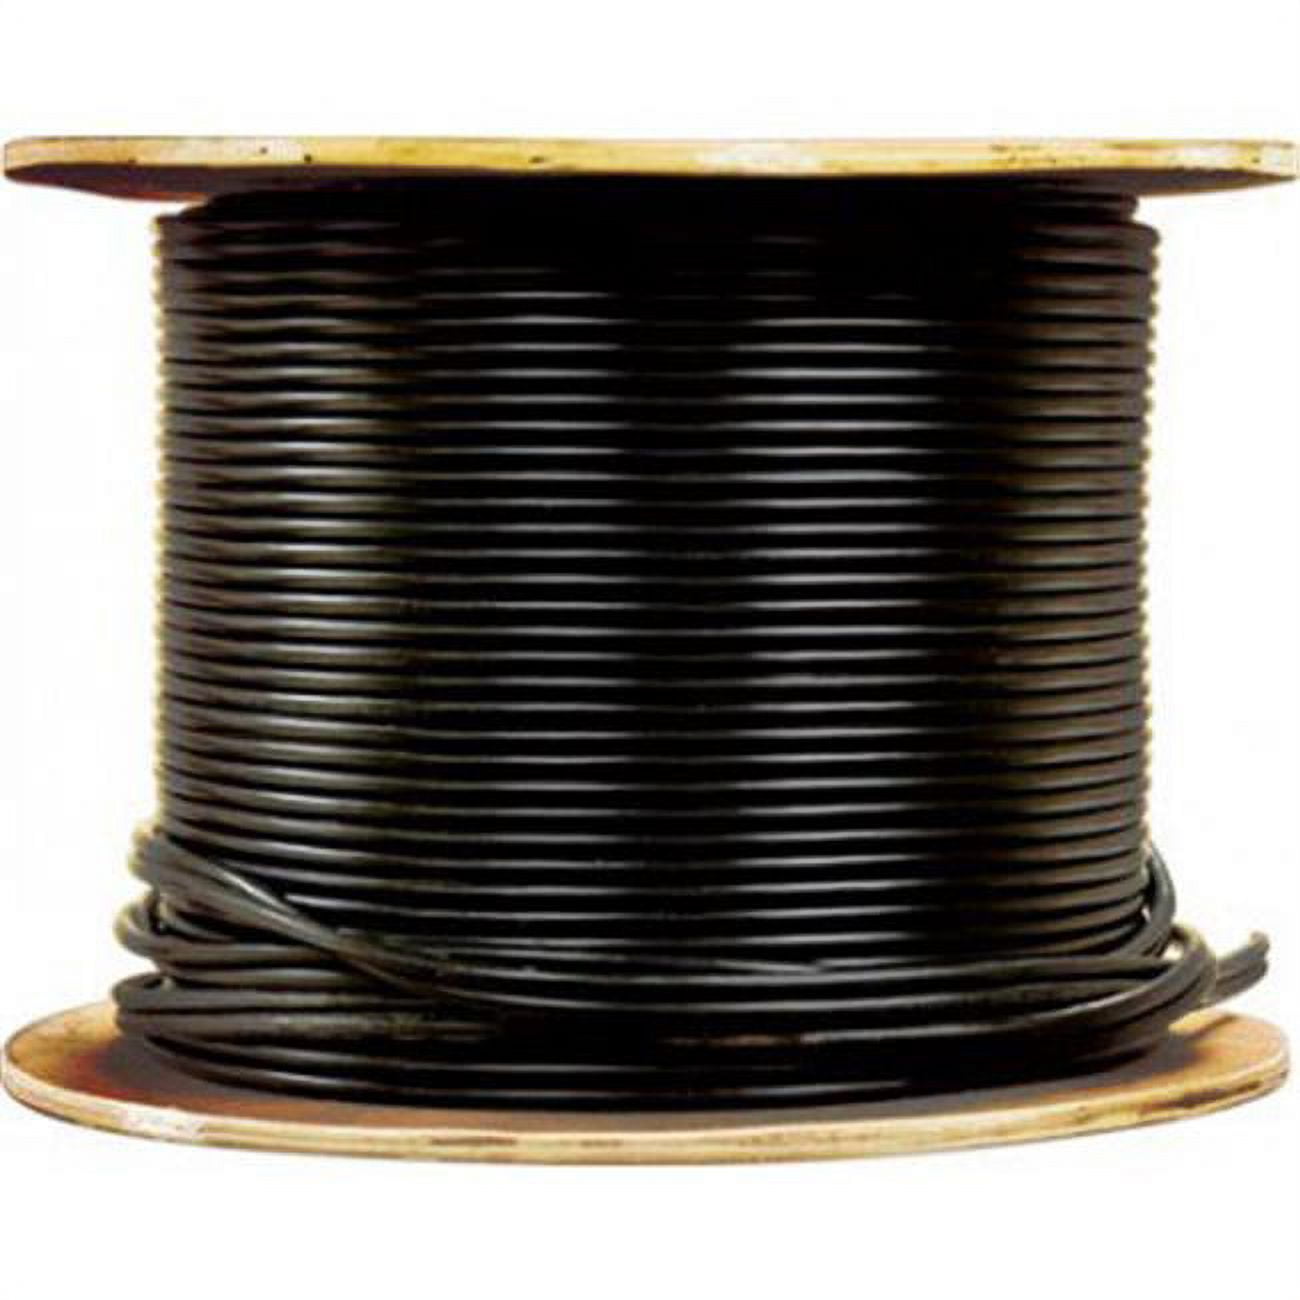 Lvw-12-500 12-2 Gauge Low Voltage Wire With 500 Ft. Spool - Black